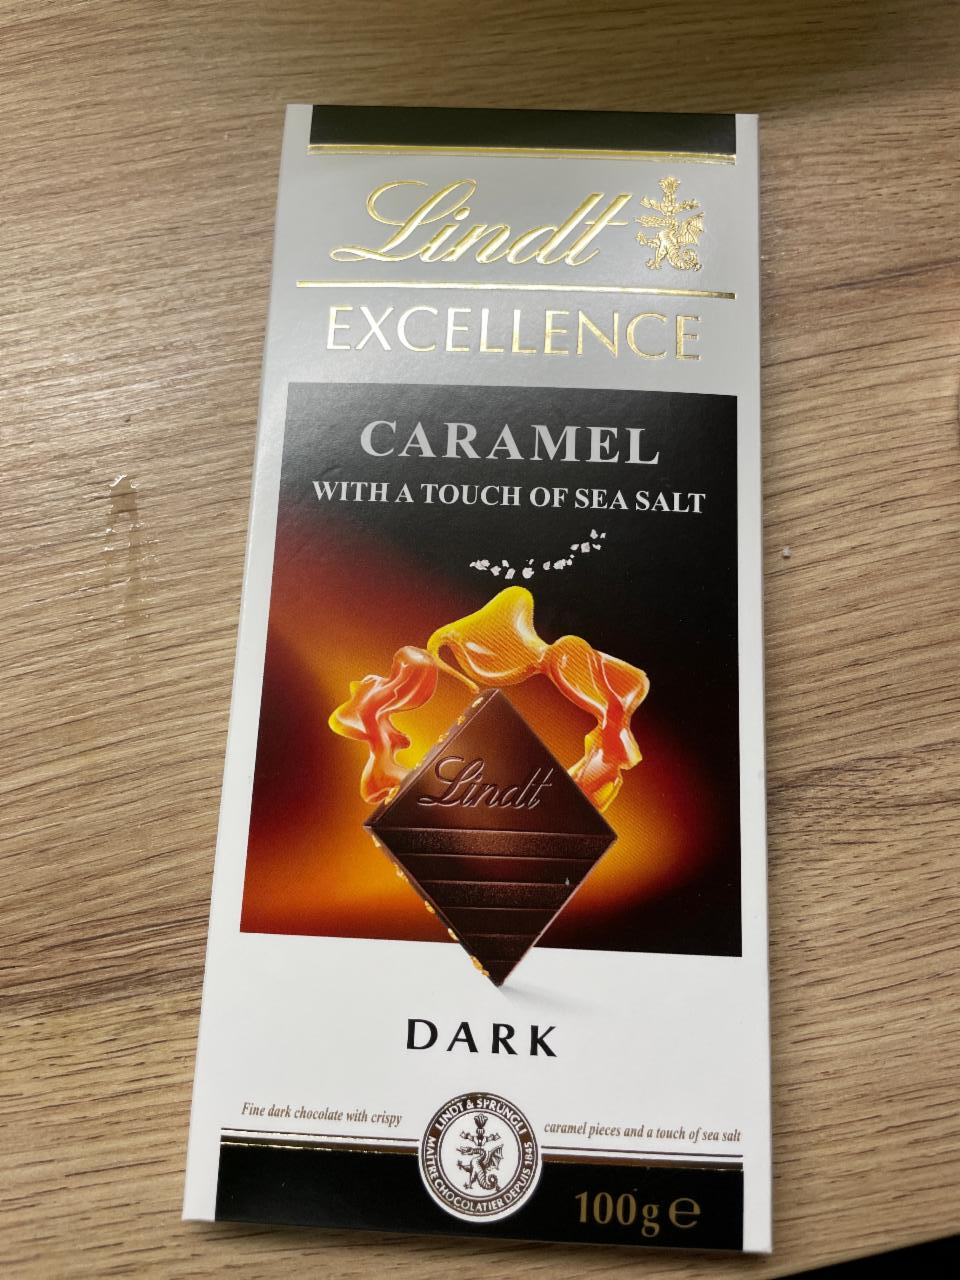 Képek - Excellence Caramel with a touch of sea salt dark Lindt